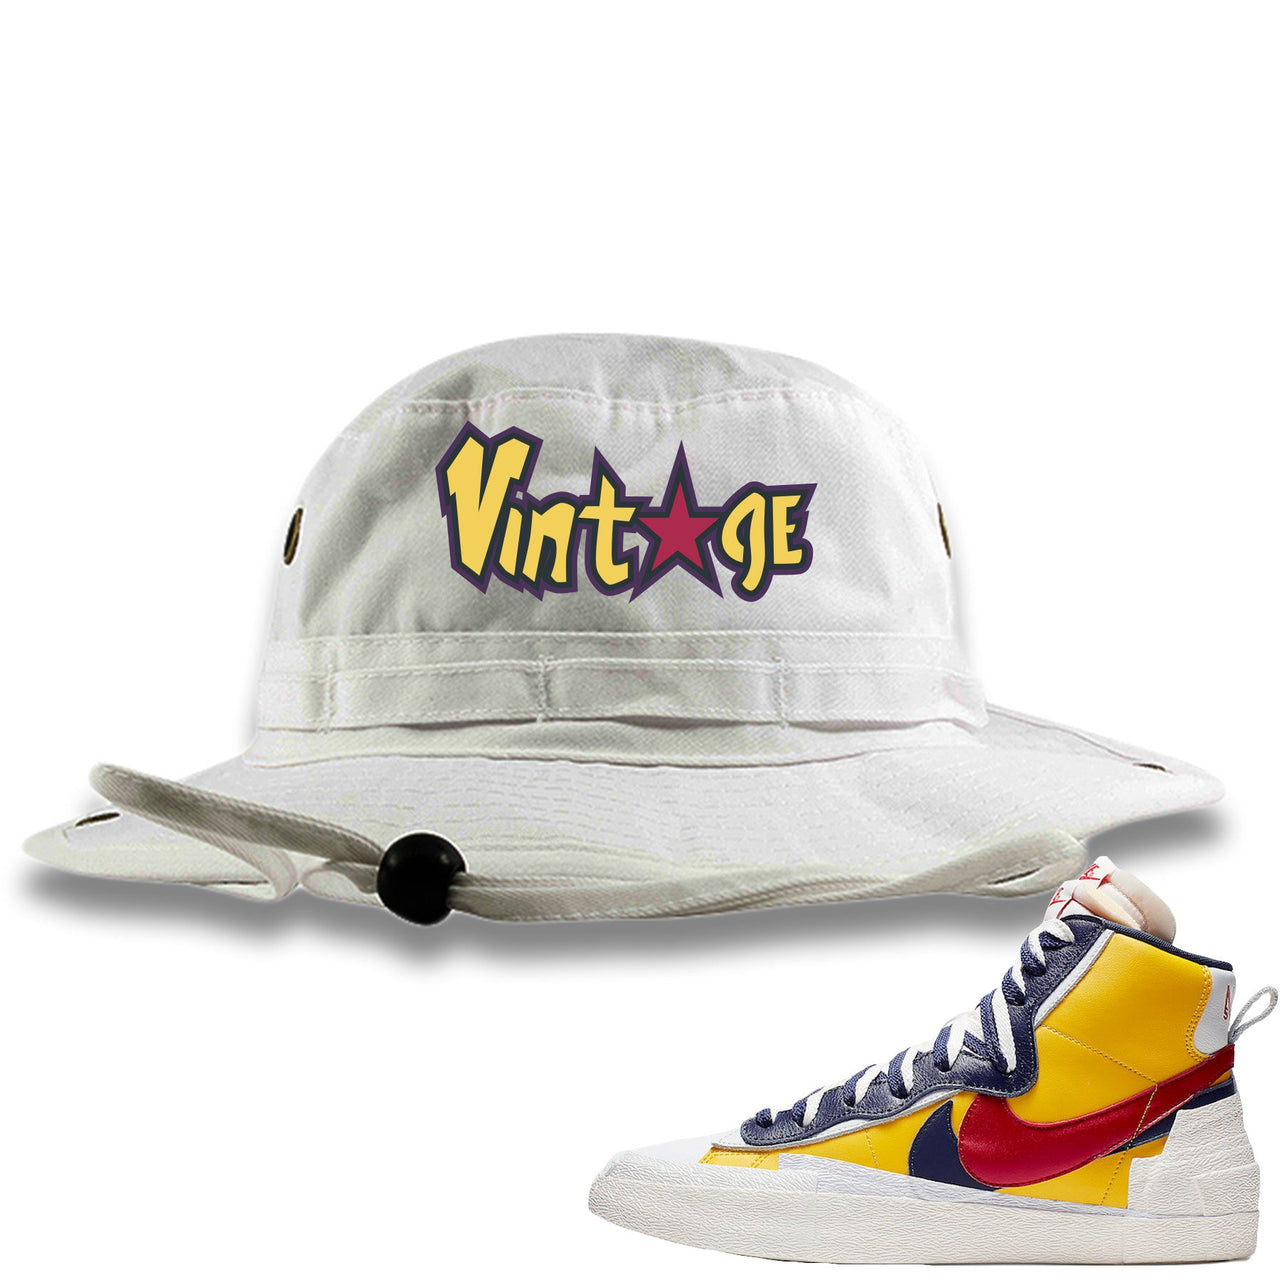 Varsity Maize Mid Blazers Bucket Hat | Vintage with Star Logo, White